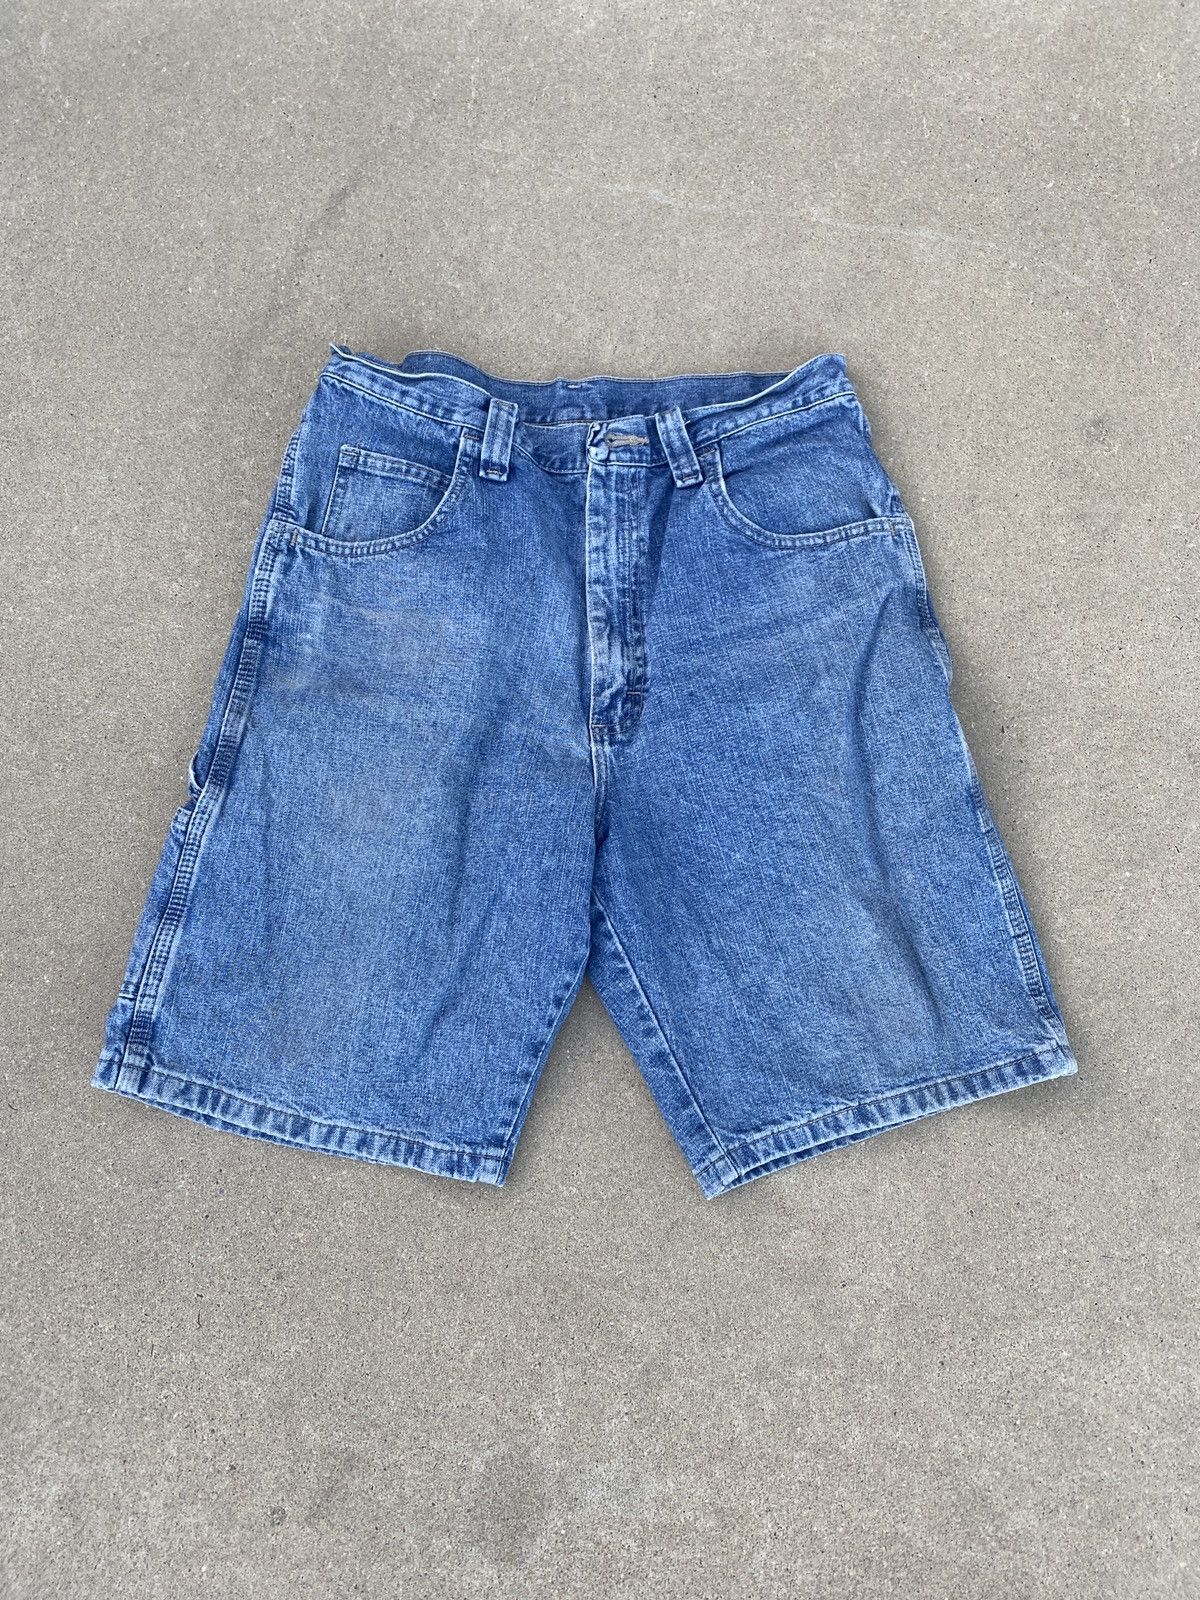 Vintage Wrangler Jorts Jean Shorts Size US 32 / EU 48 - 1 Preview